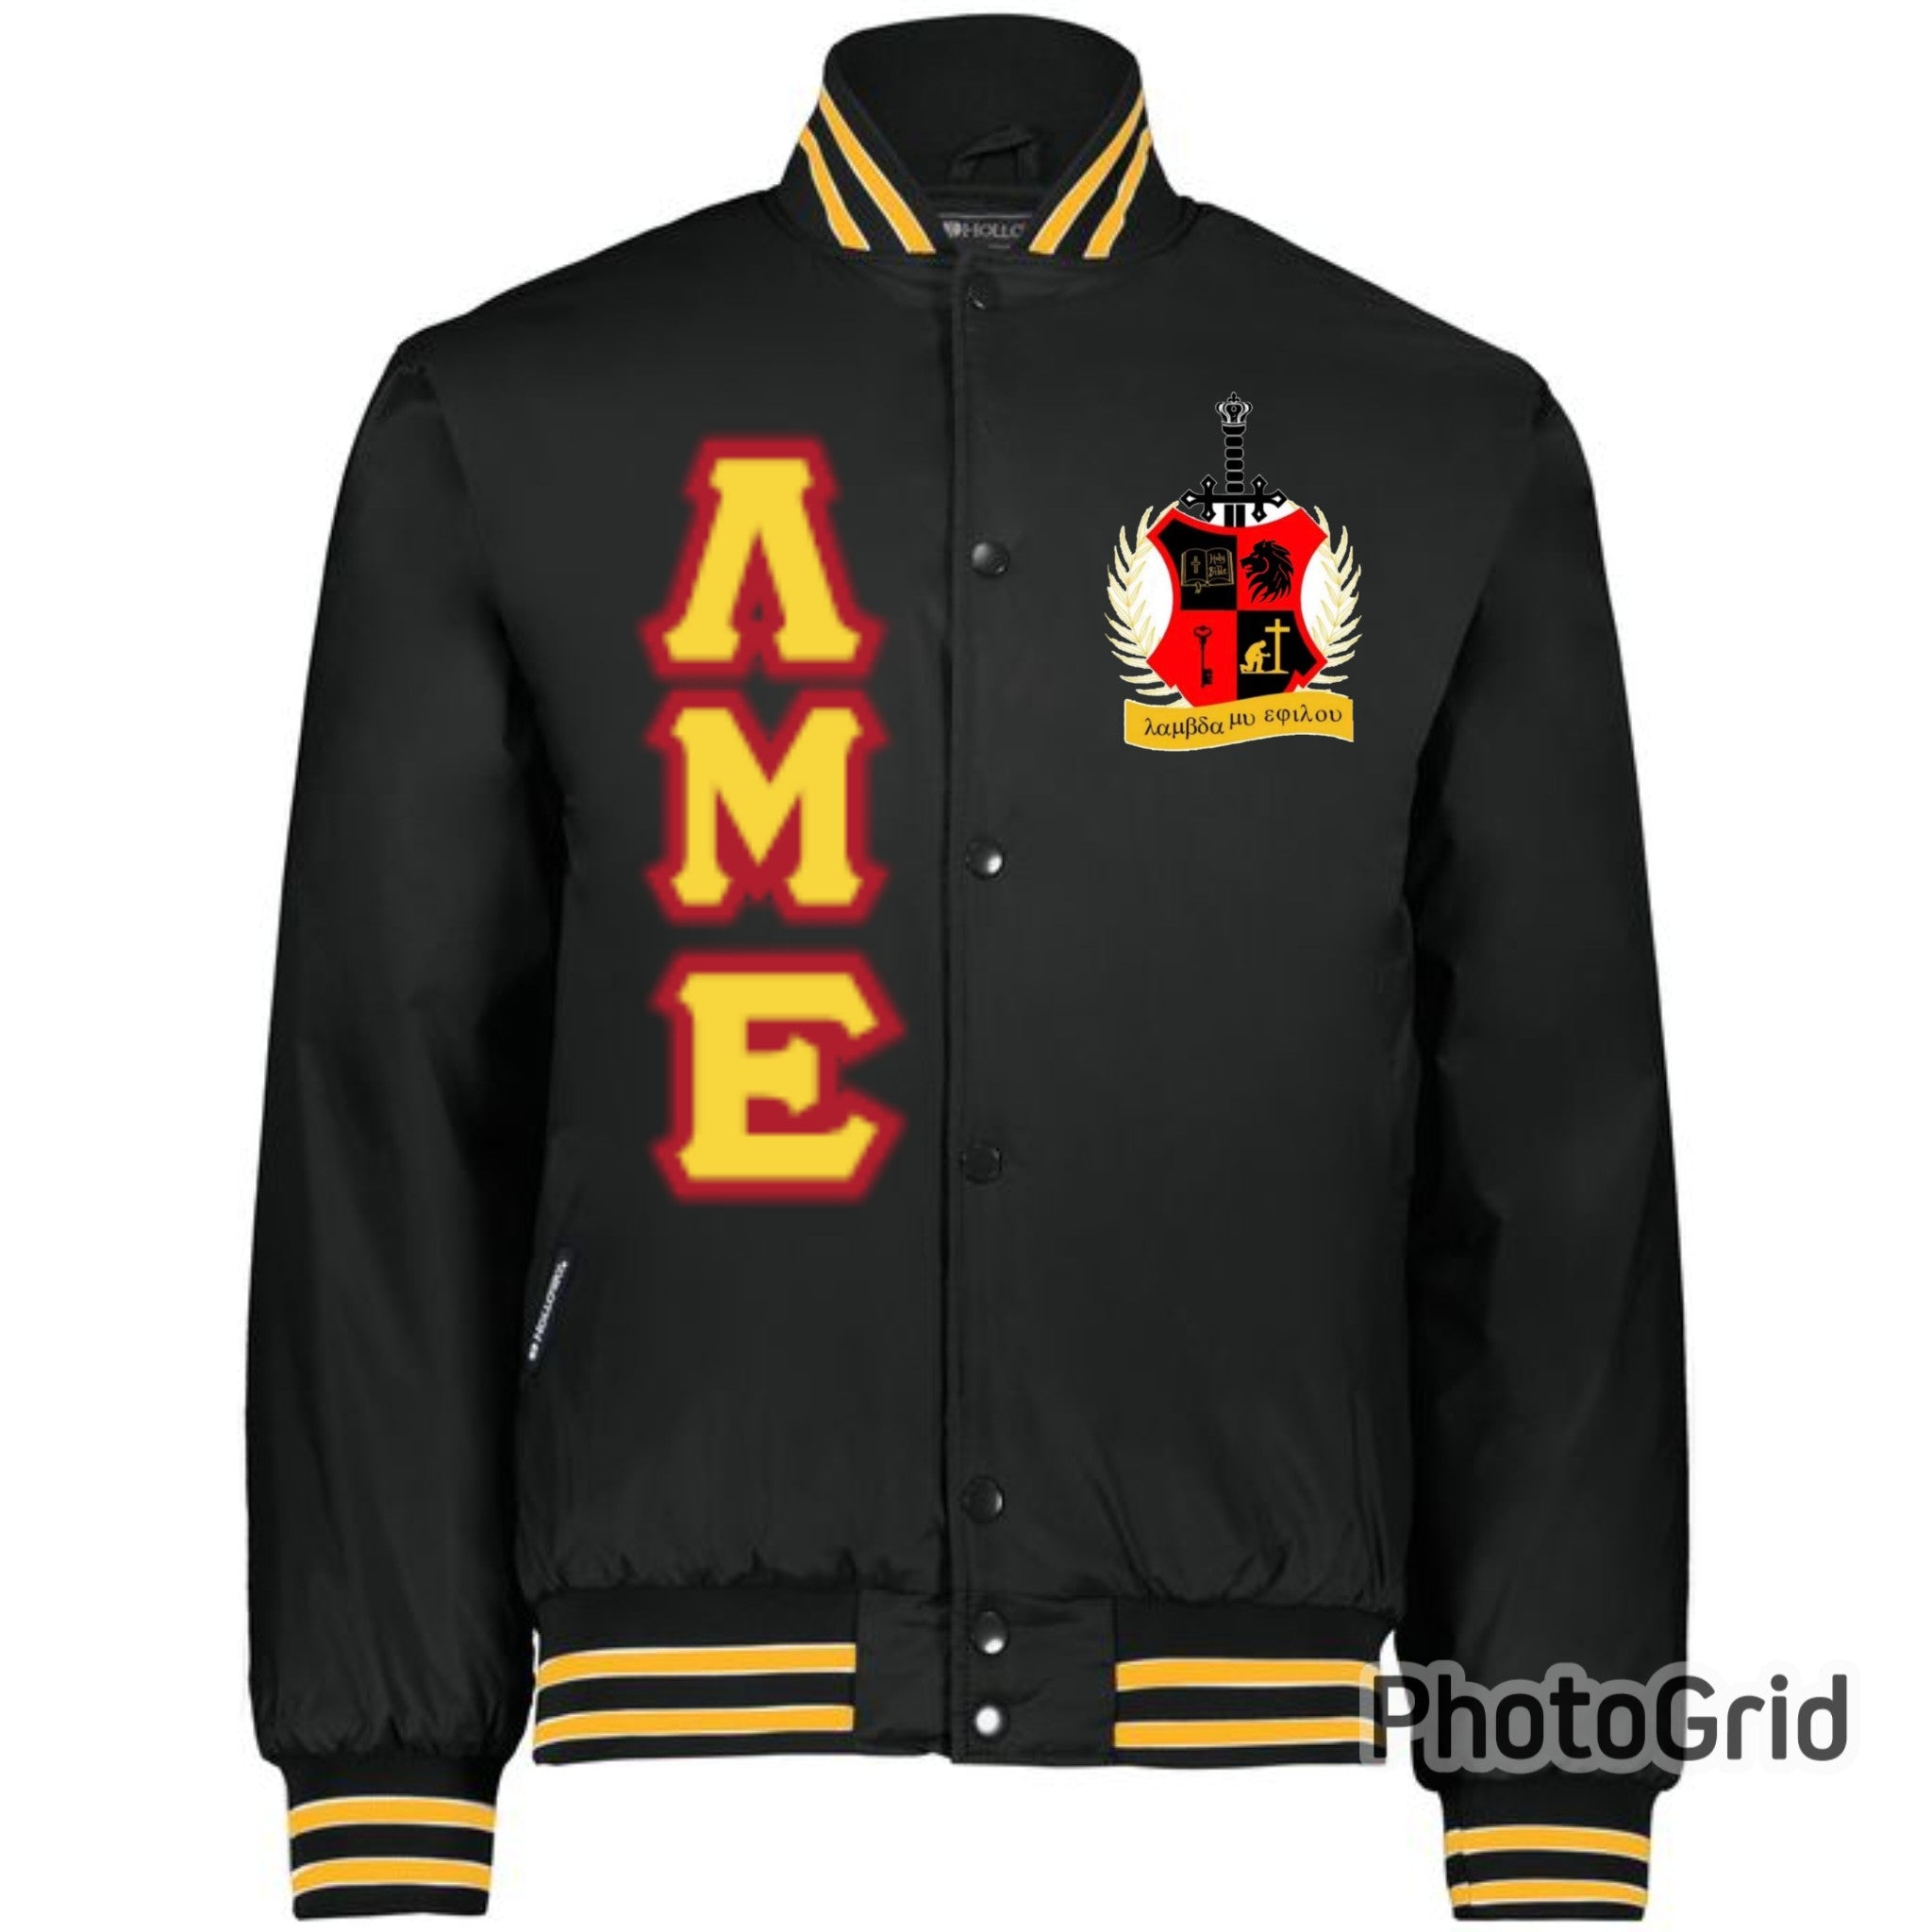 LME bomber jacket